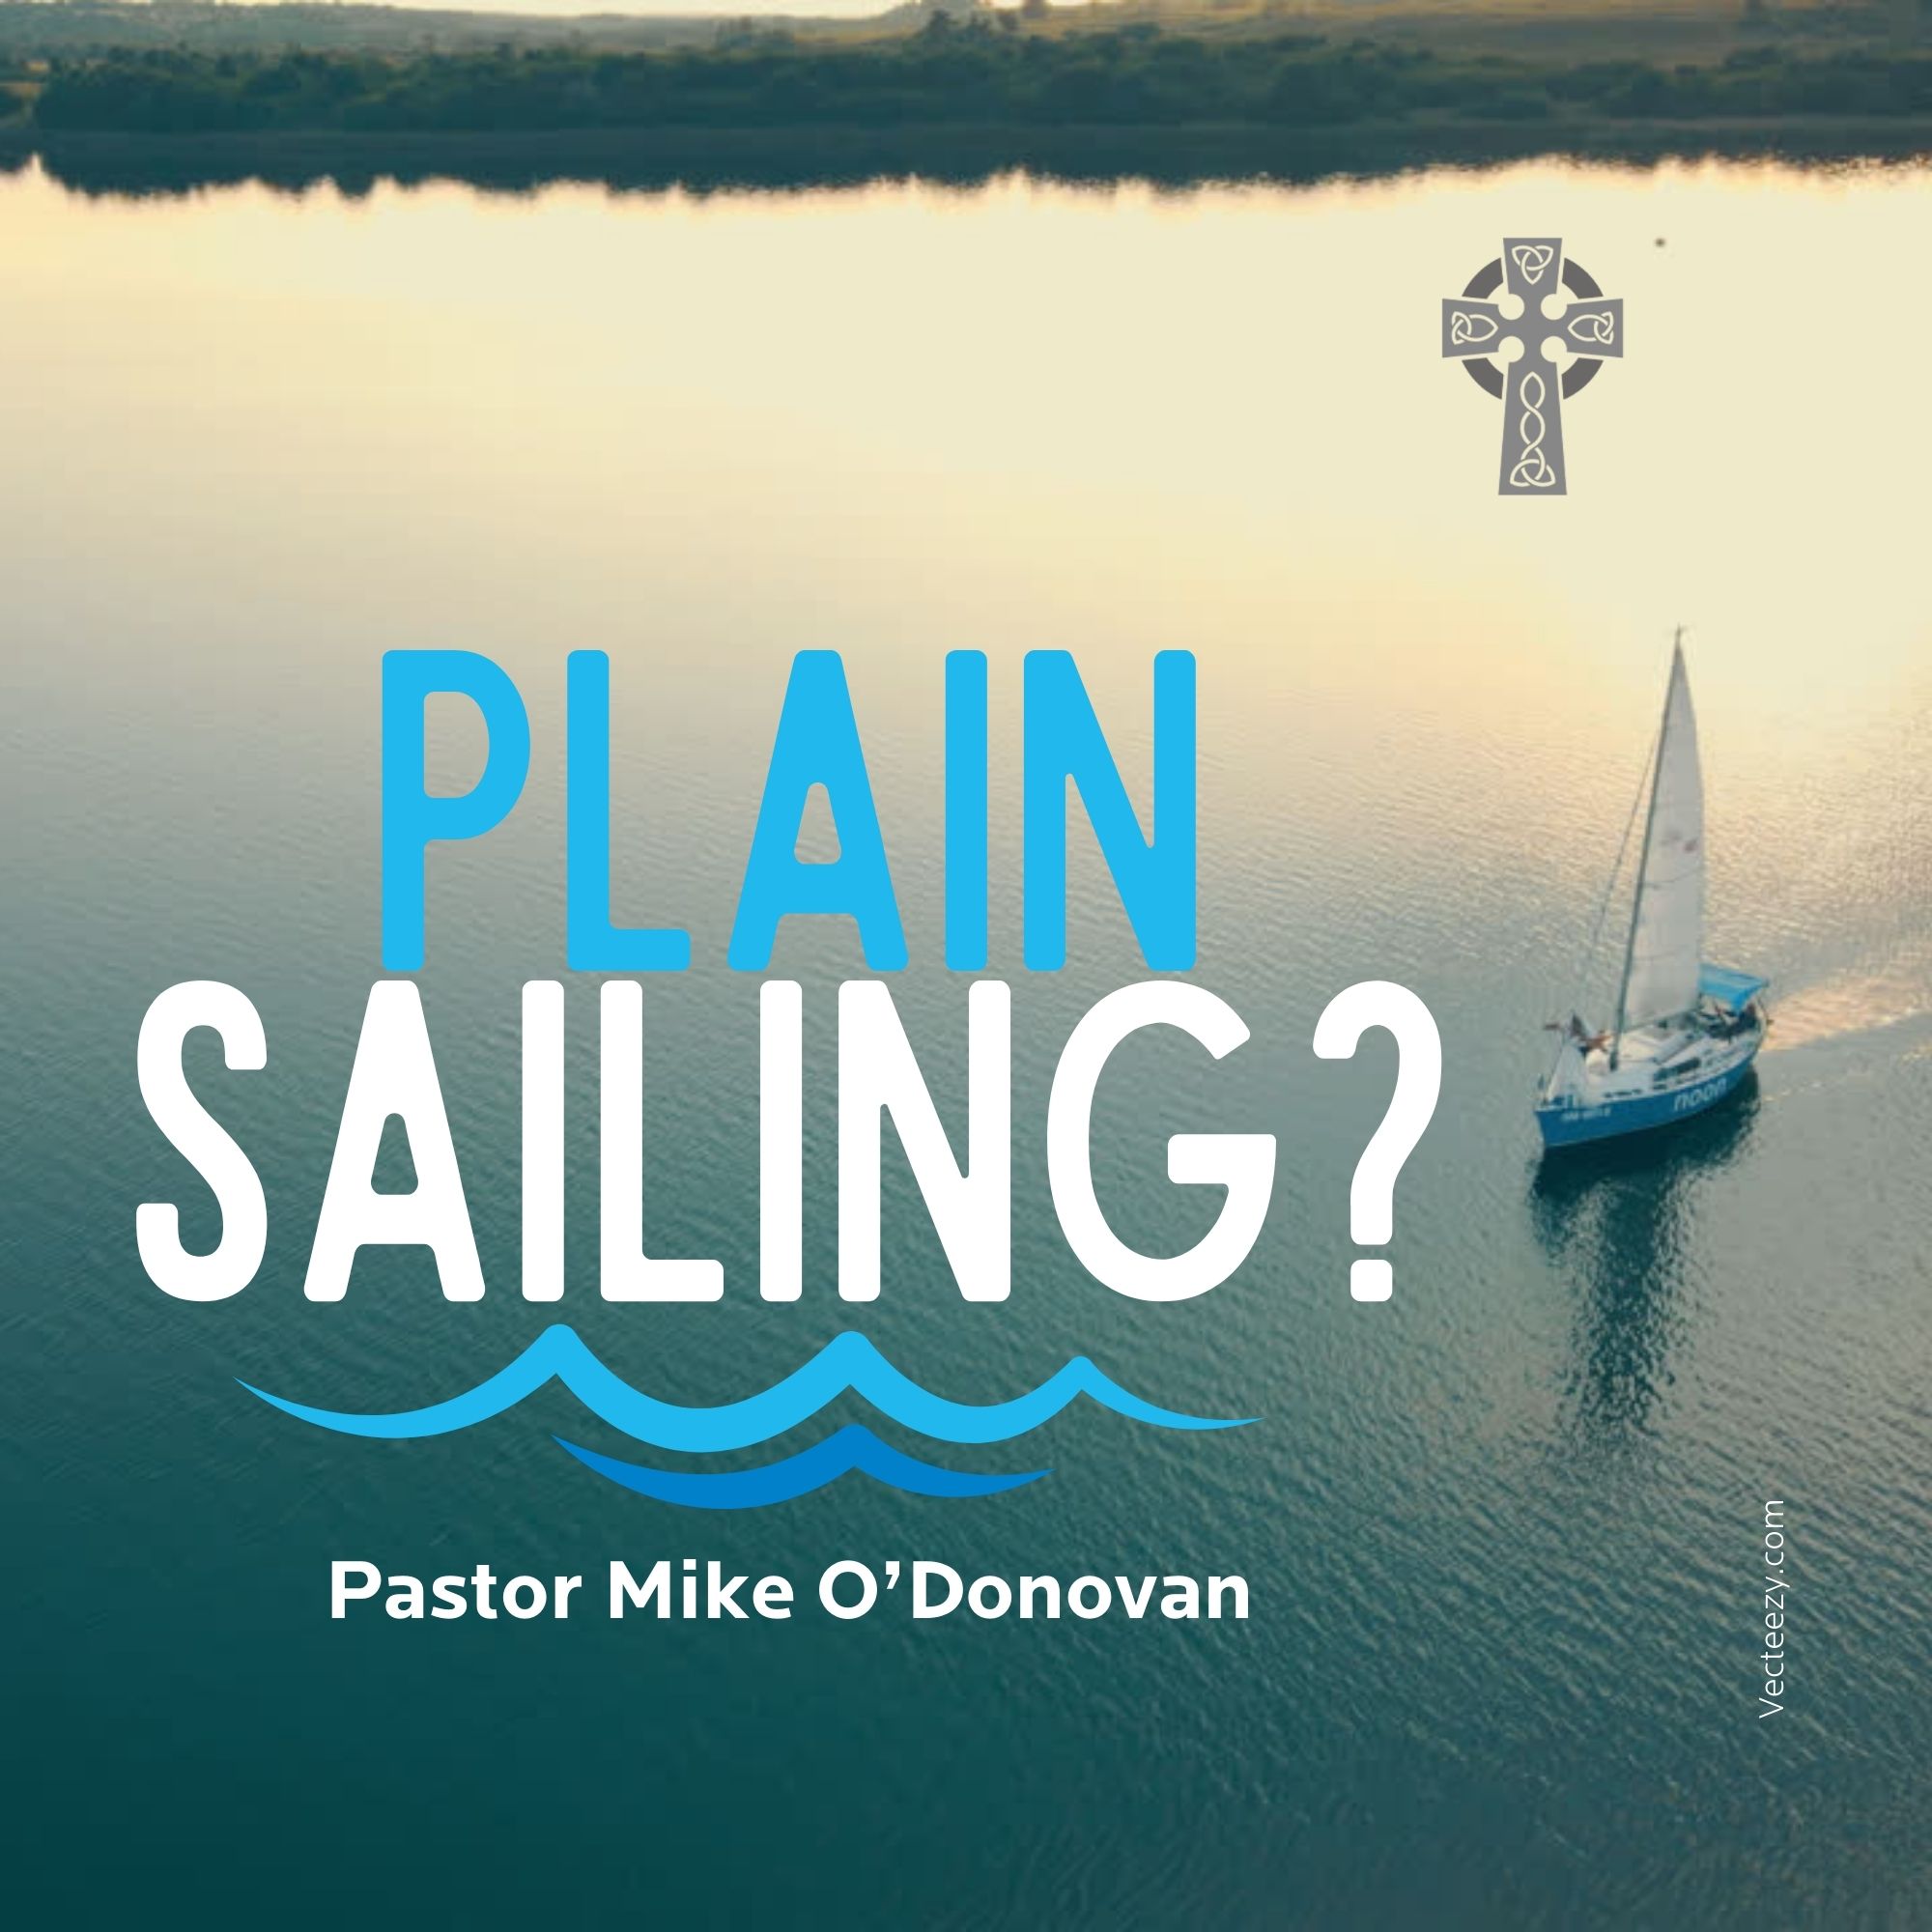 Plain Sailing? - Pastor Mike O'Donovan